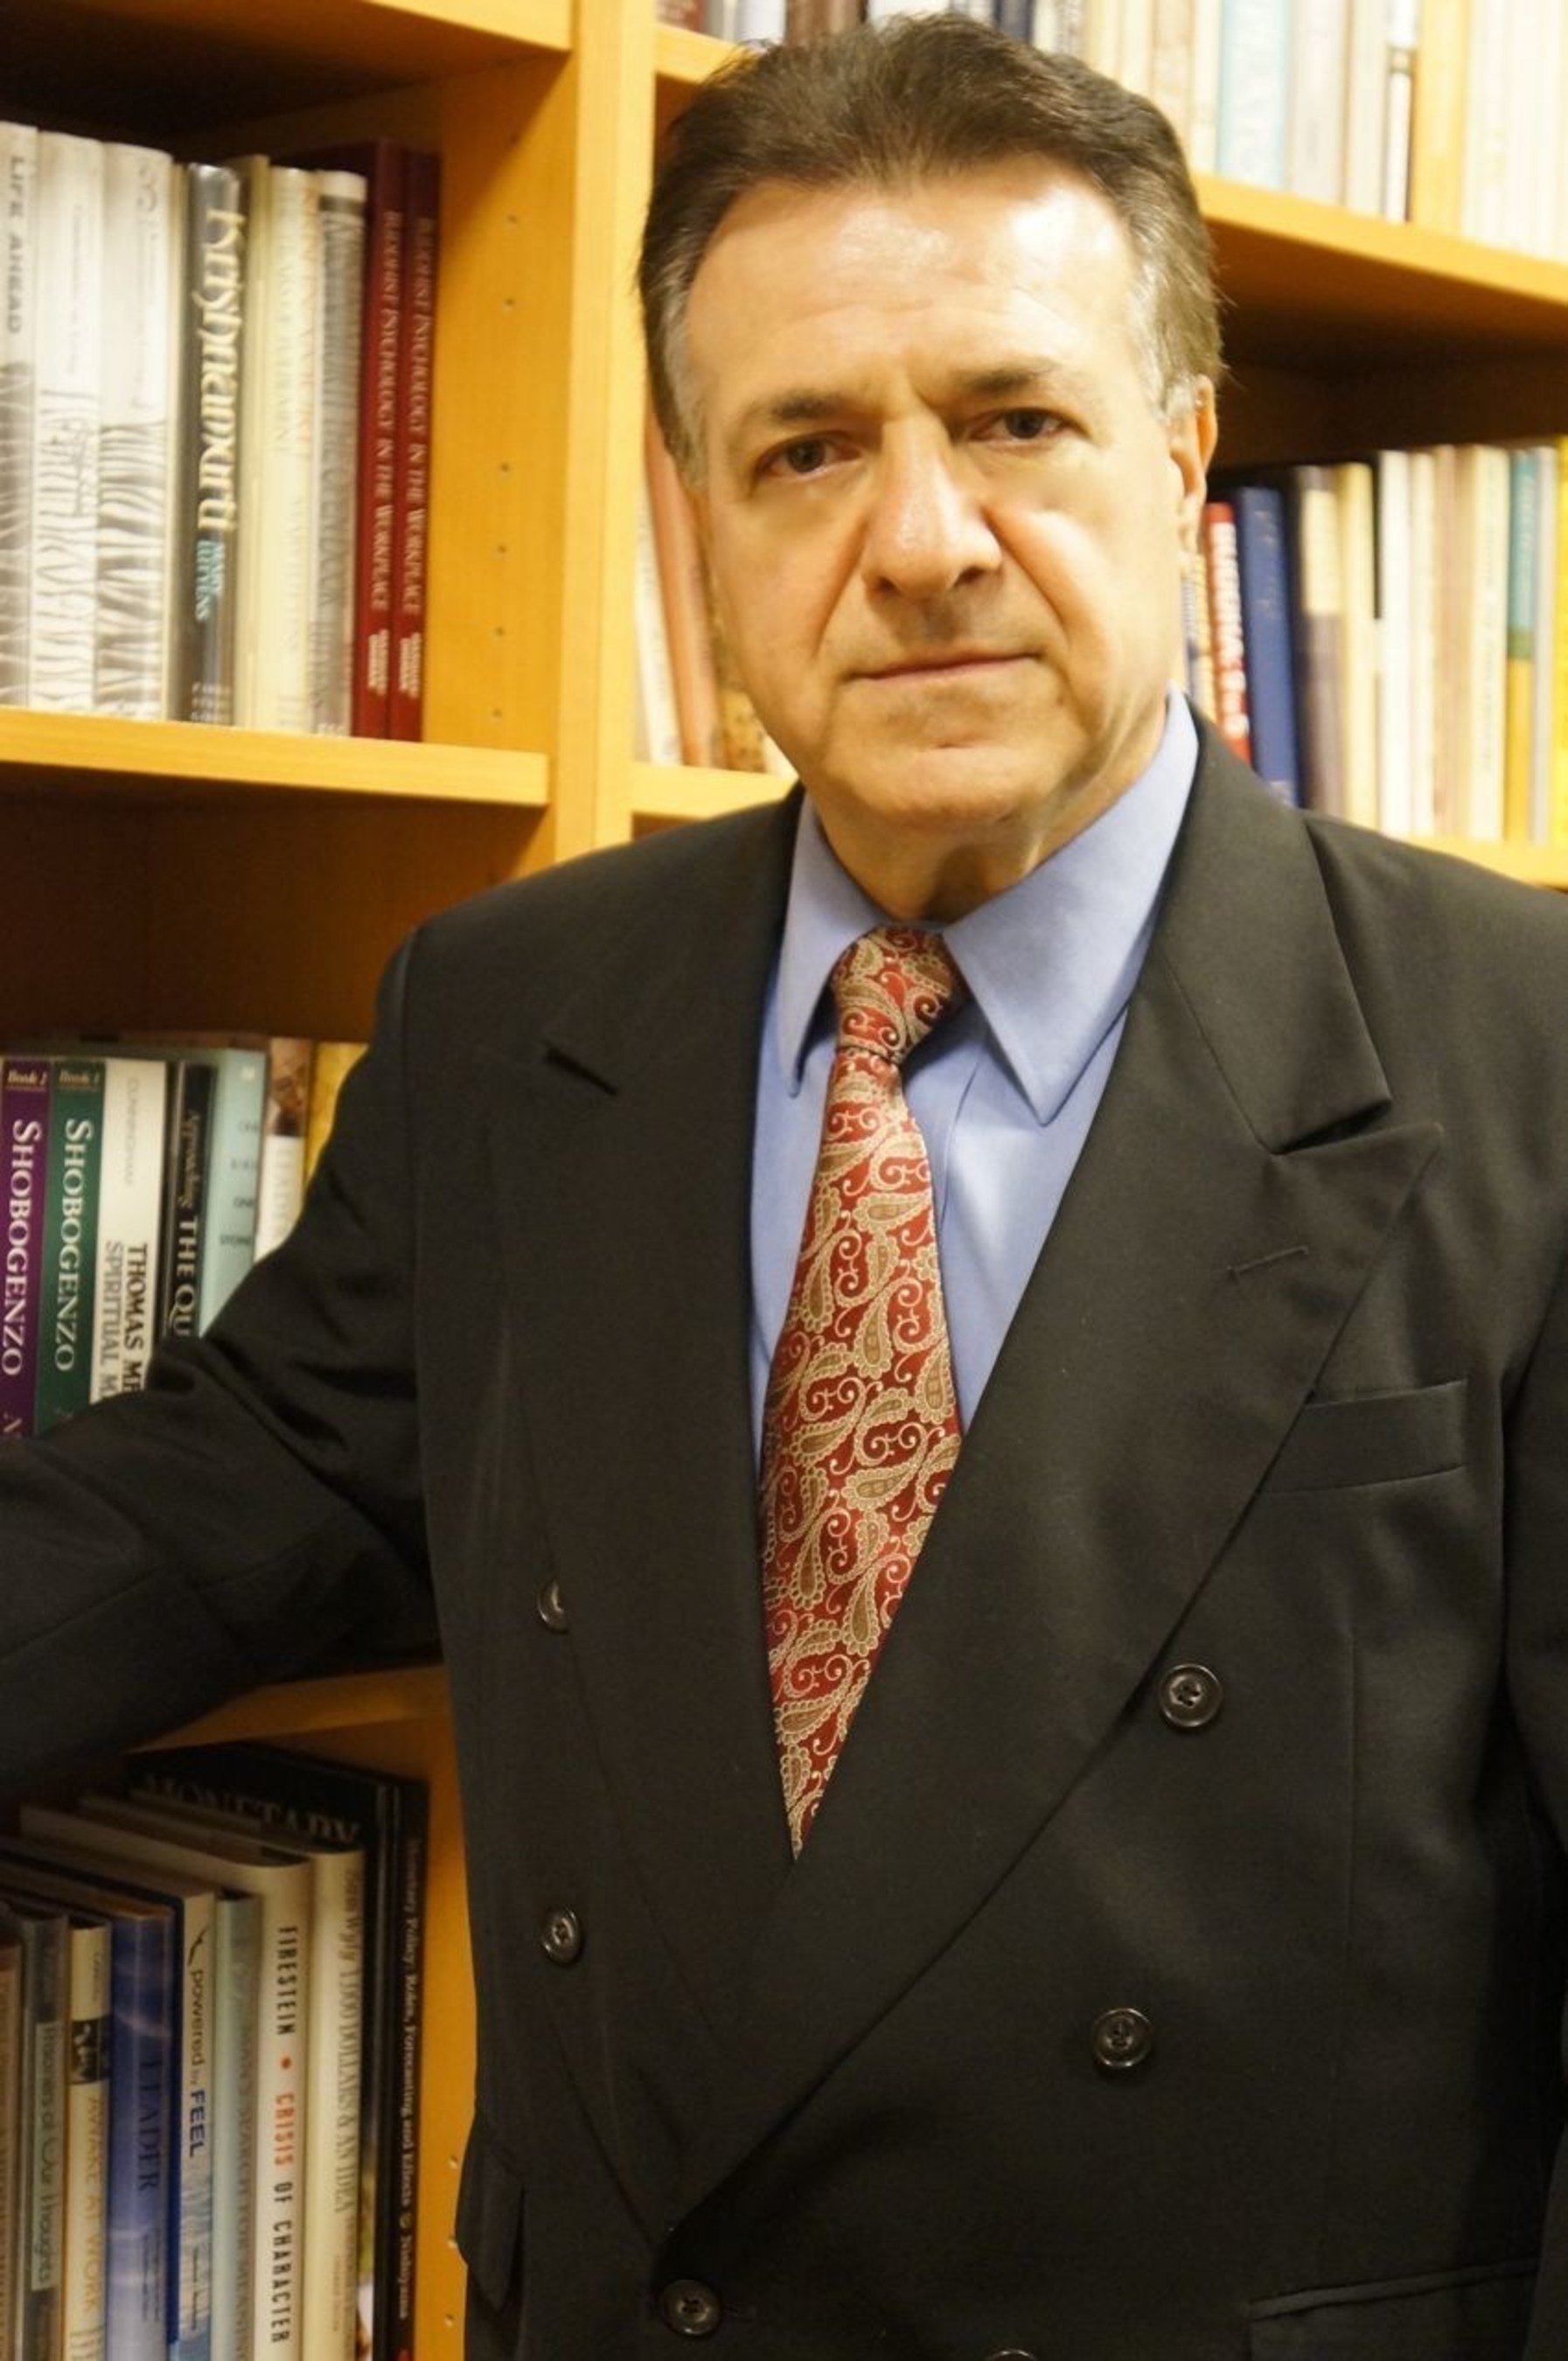 Angelo Camillo, Ph.D., Associate Professor of Strategic Management in Woodbury University's School of Business